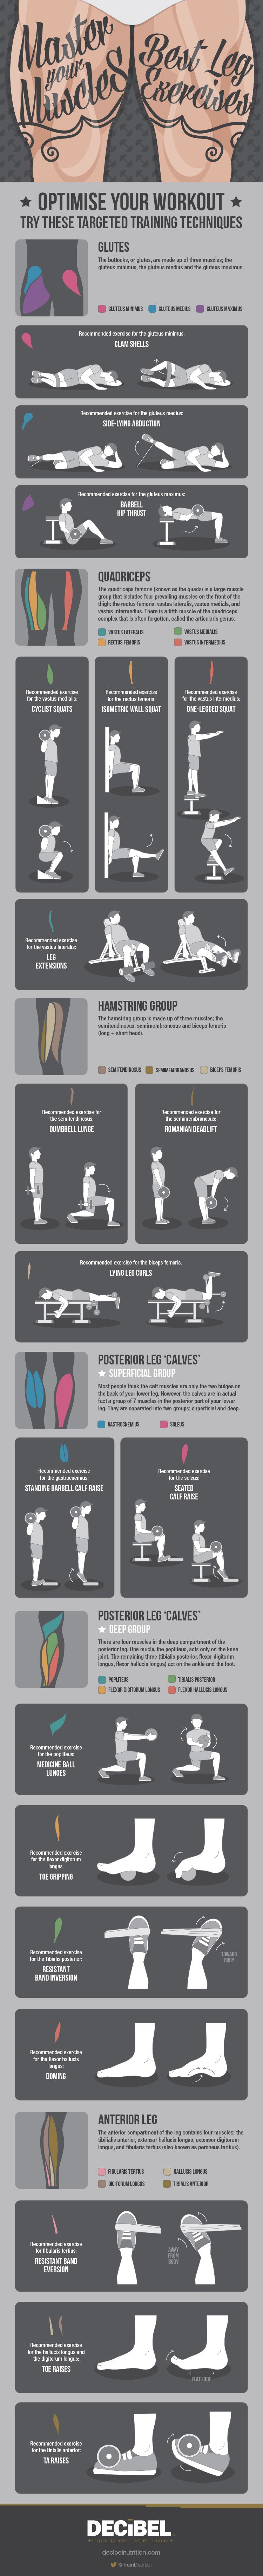 Best Leg Exercises Infographic